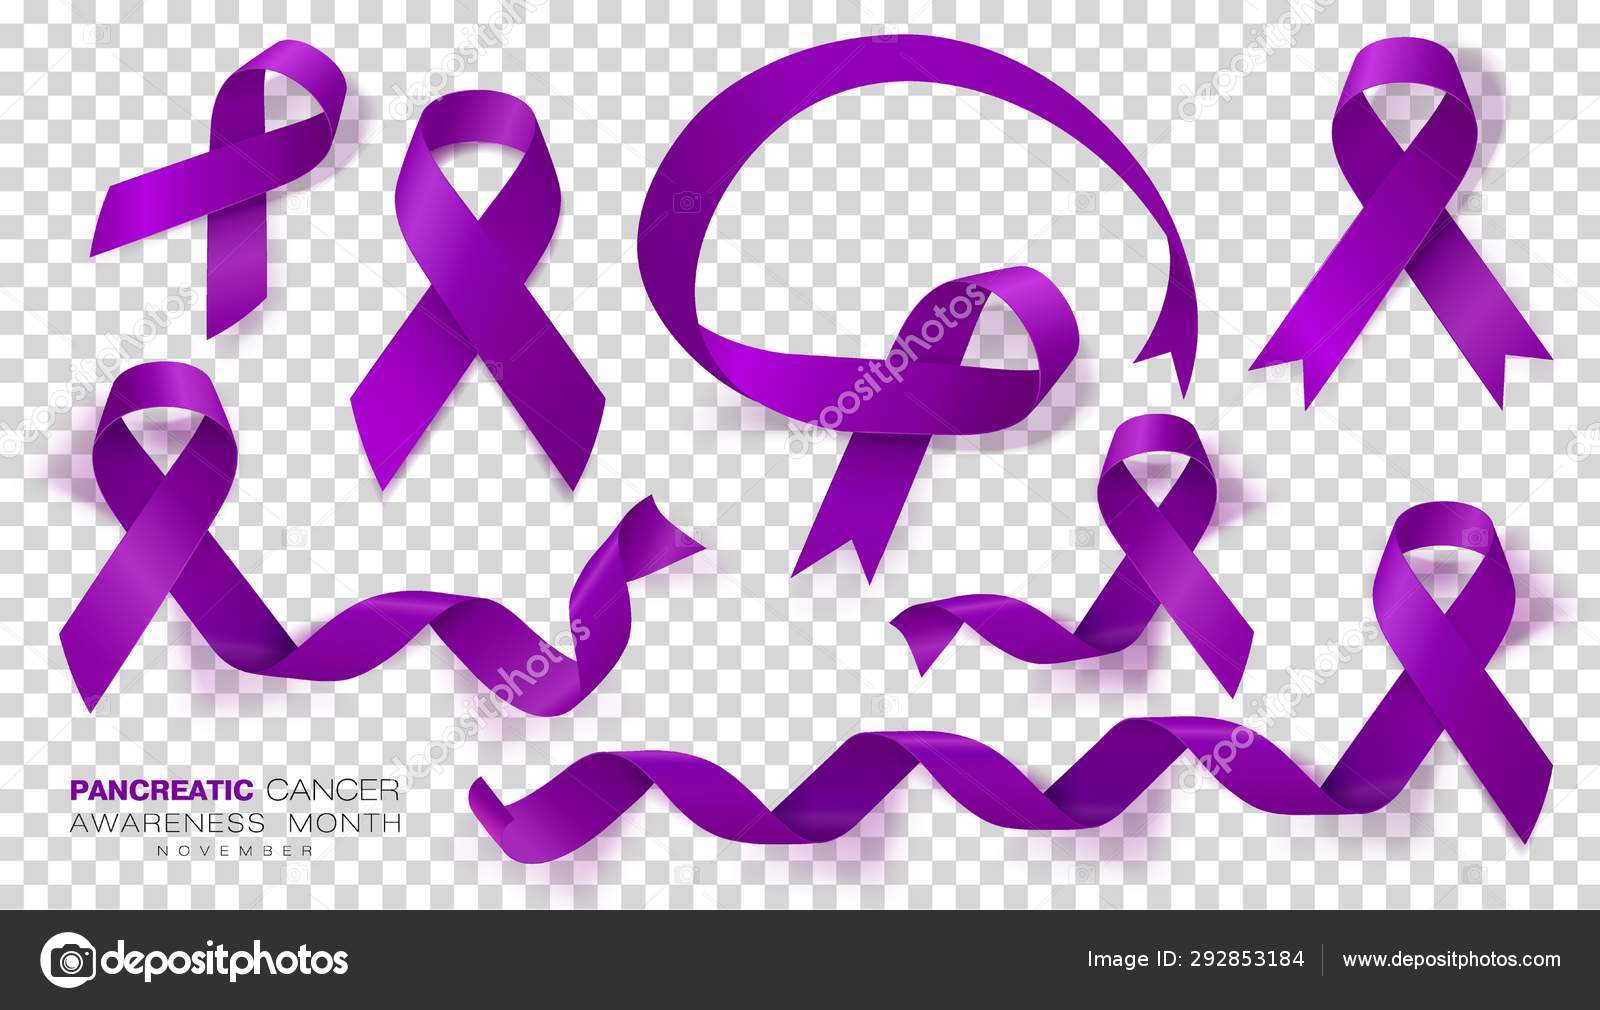 pancreatic cancer color ribbon